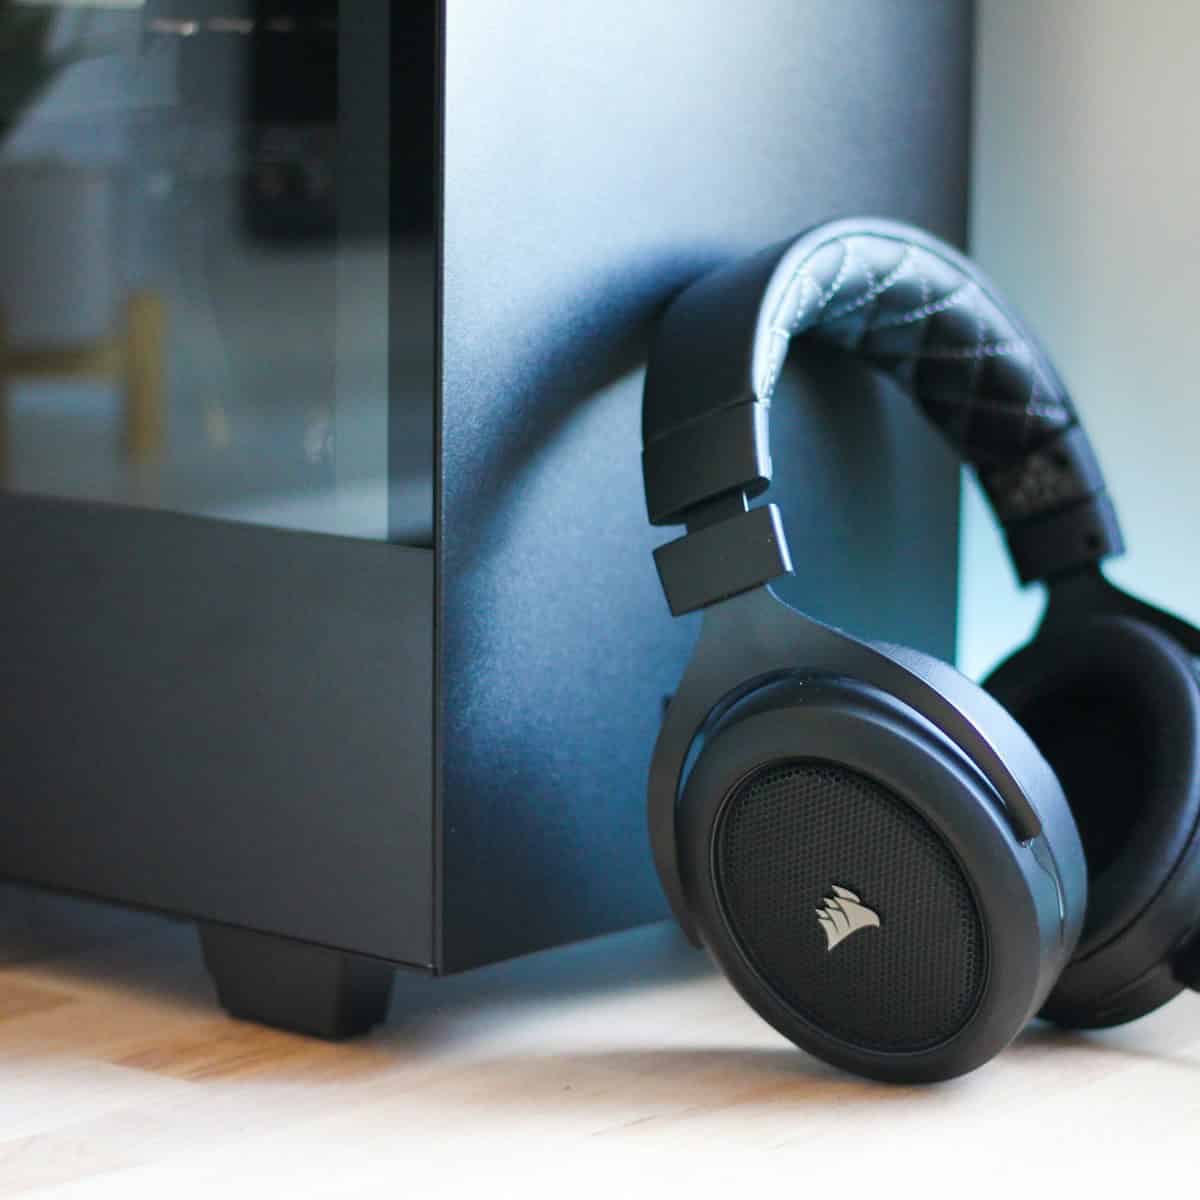 Corsair black headphones beside cabinet